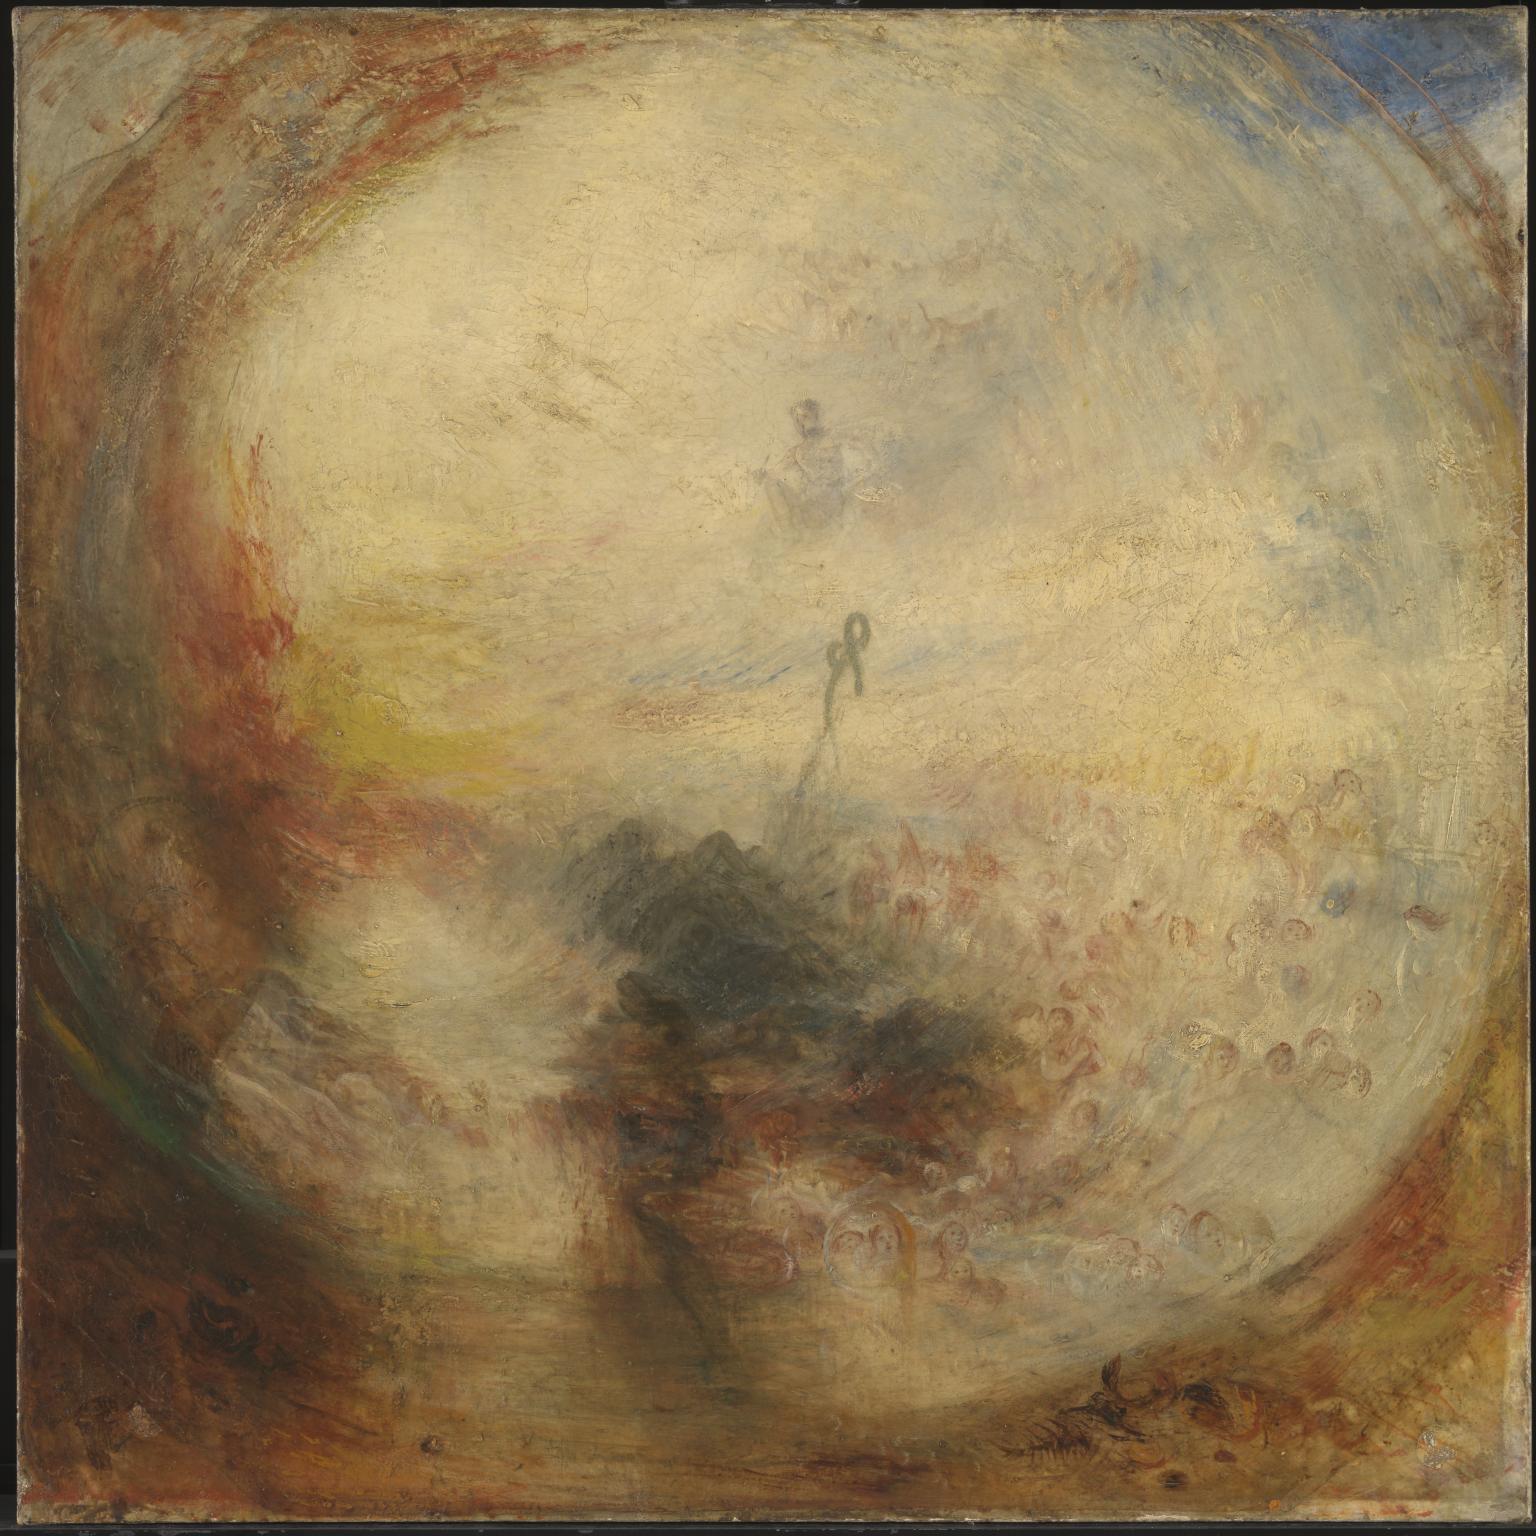  Luz y color by Joseph Mallord William Turner - 1843 - 787 x 787 cm Tate Modern